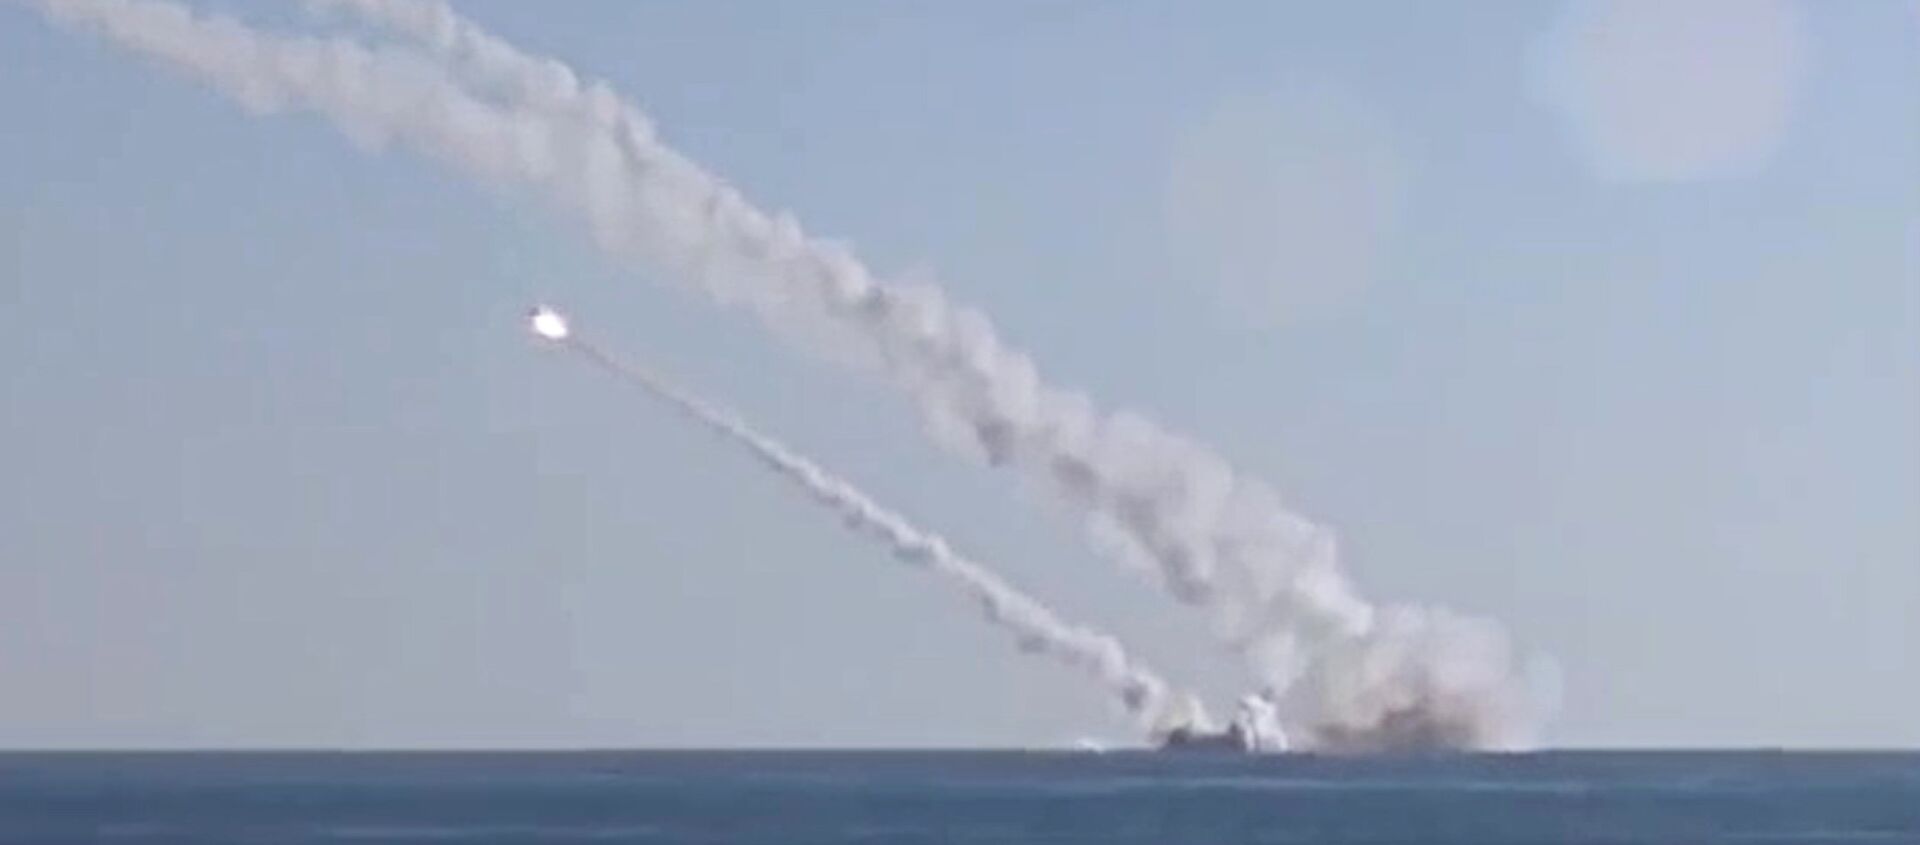 Rostov-on-Don submarine launches 3M-54 Kalibr (Klub) anti-ship missiles - Sputnik International, 1920, 20.03.2016